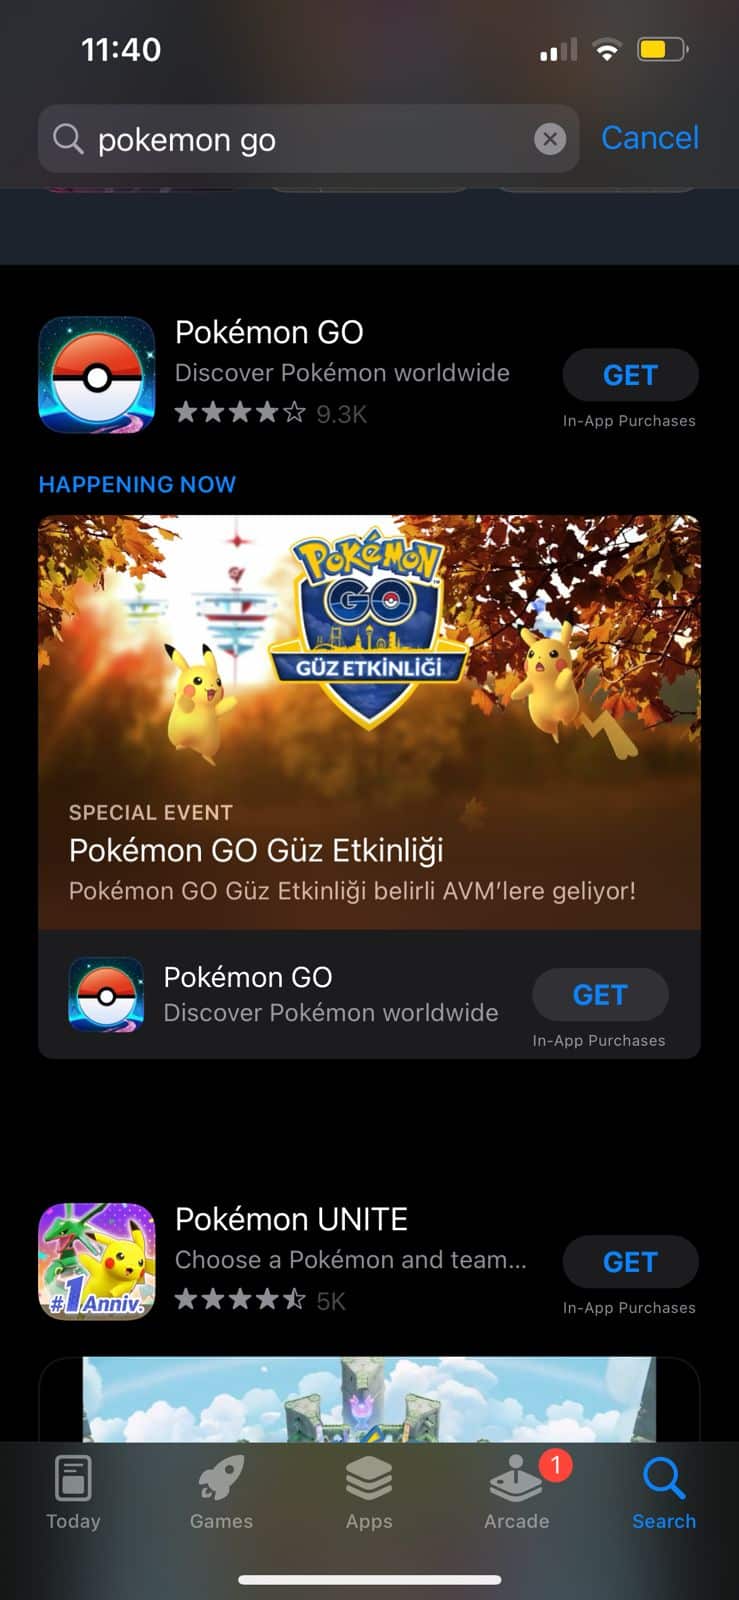 Pokémon Go on app store